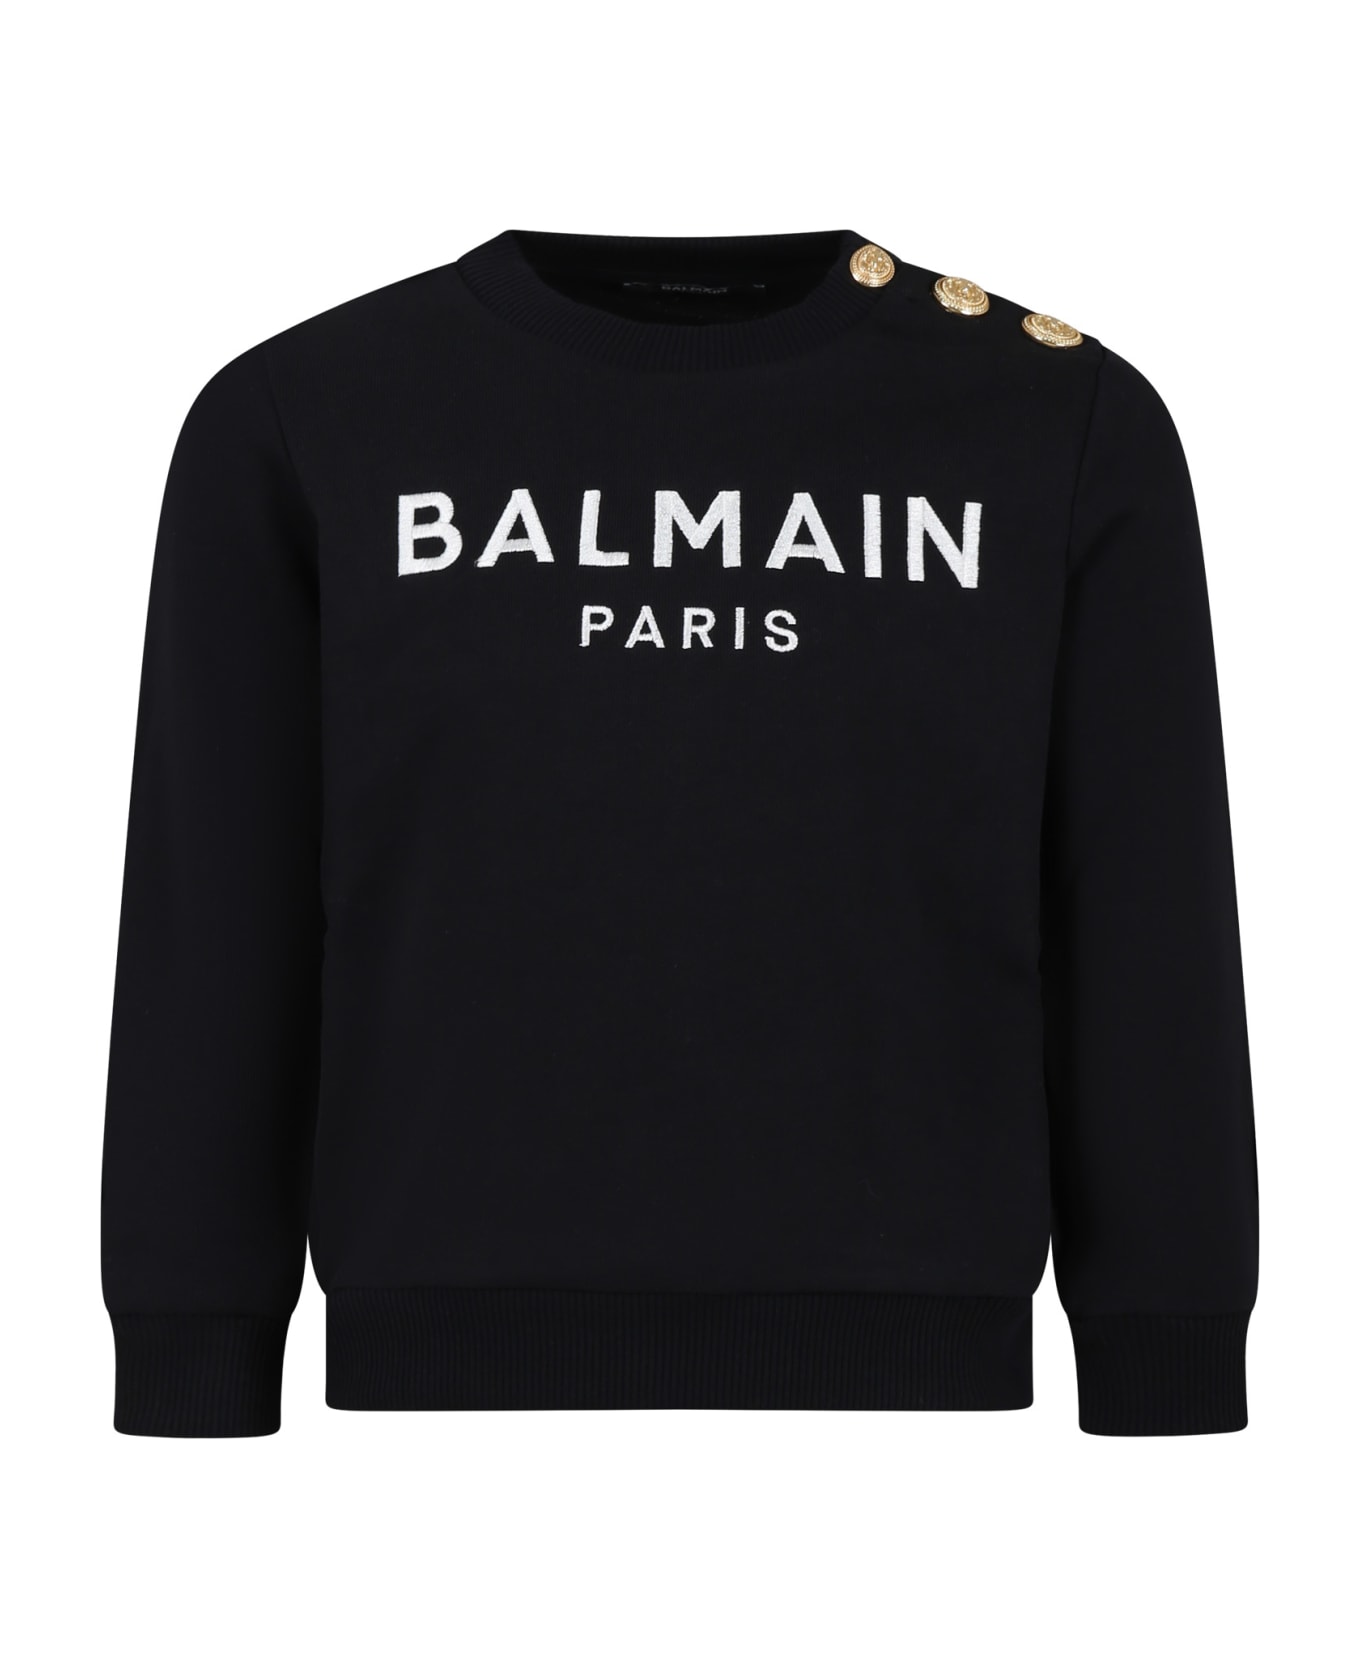 Balmain Black Sweatshirt For Girl With Logo - Black/white